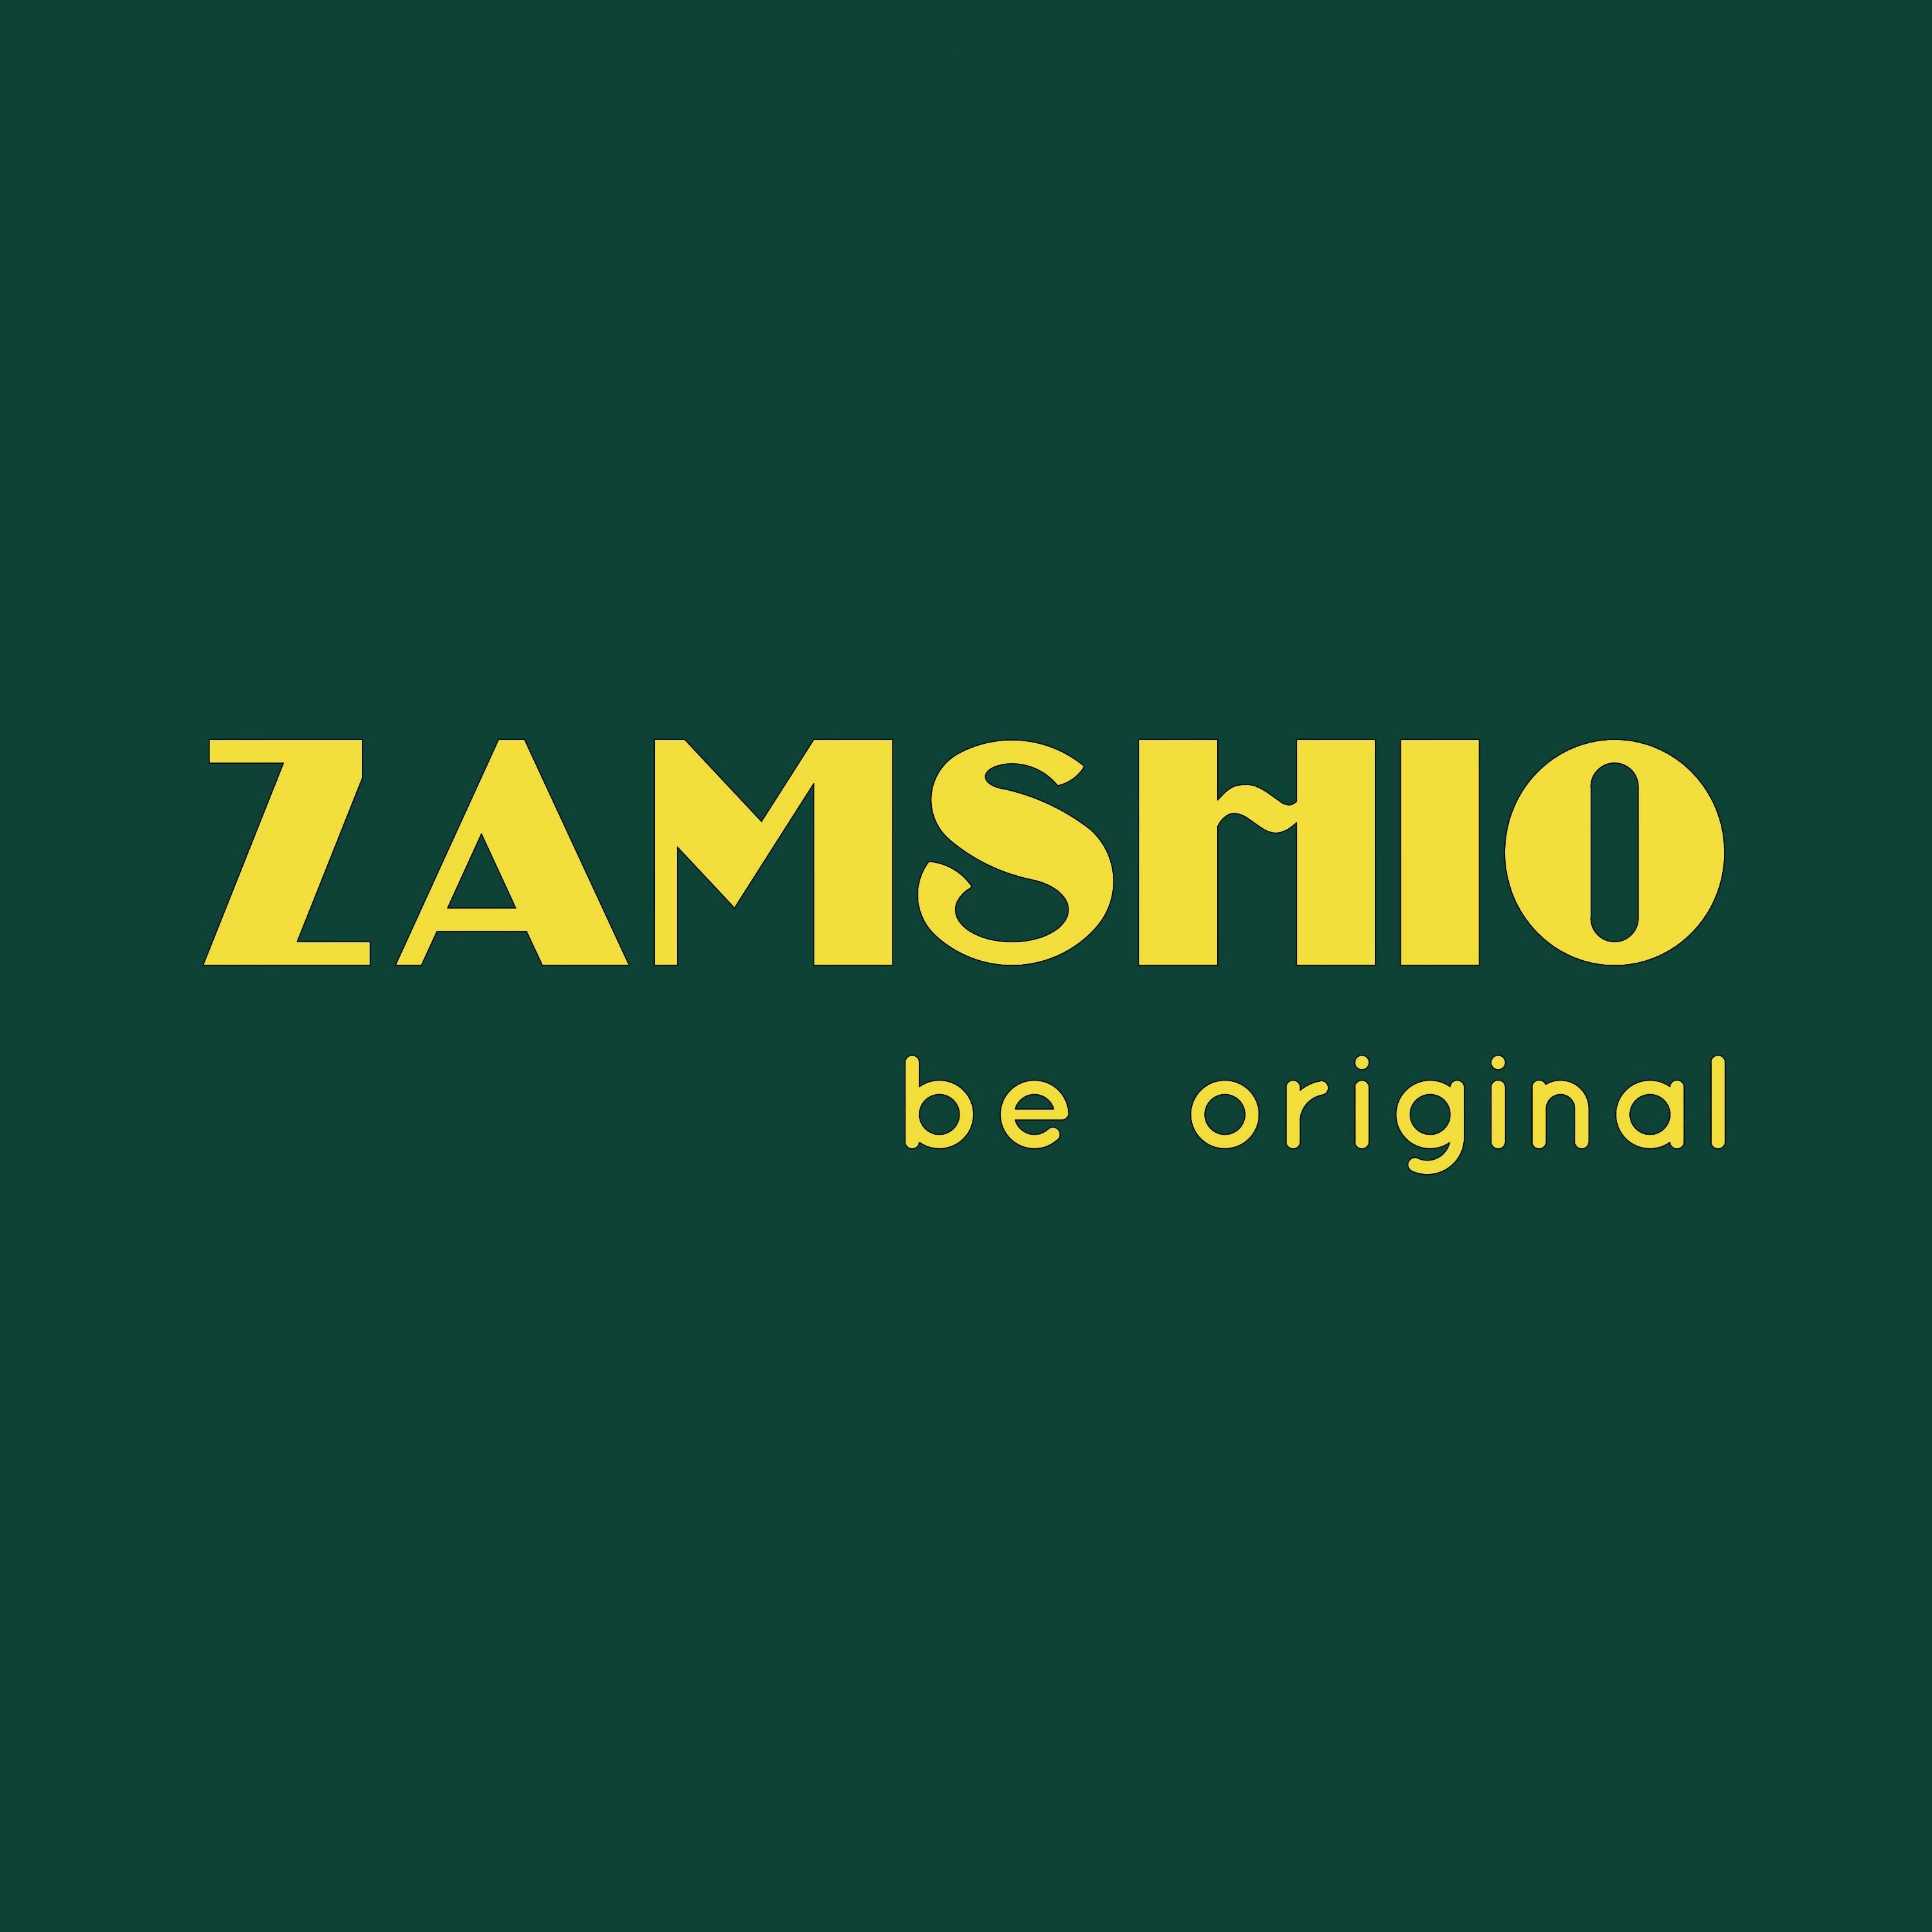 ZAMSHIO